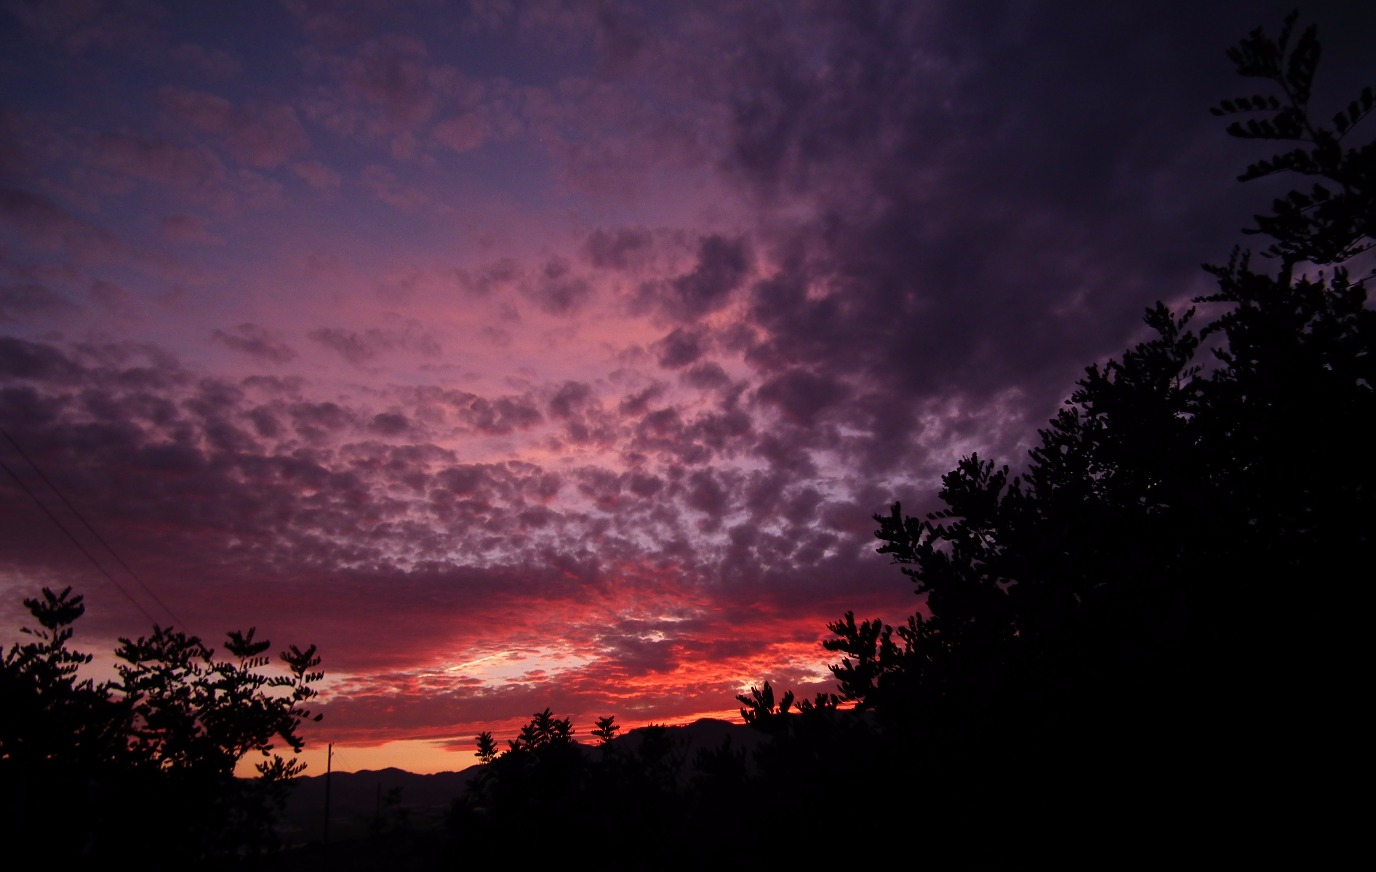 Spanish Sunset, Sunset | Spain | Mountain | Colour | Red | Purple | Orange | Sky | Night | Dark | Tree | Shadow